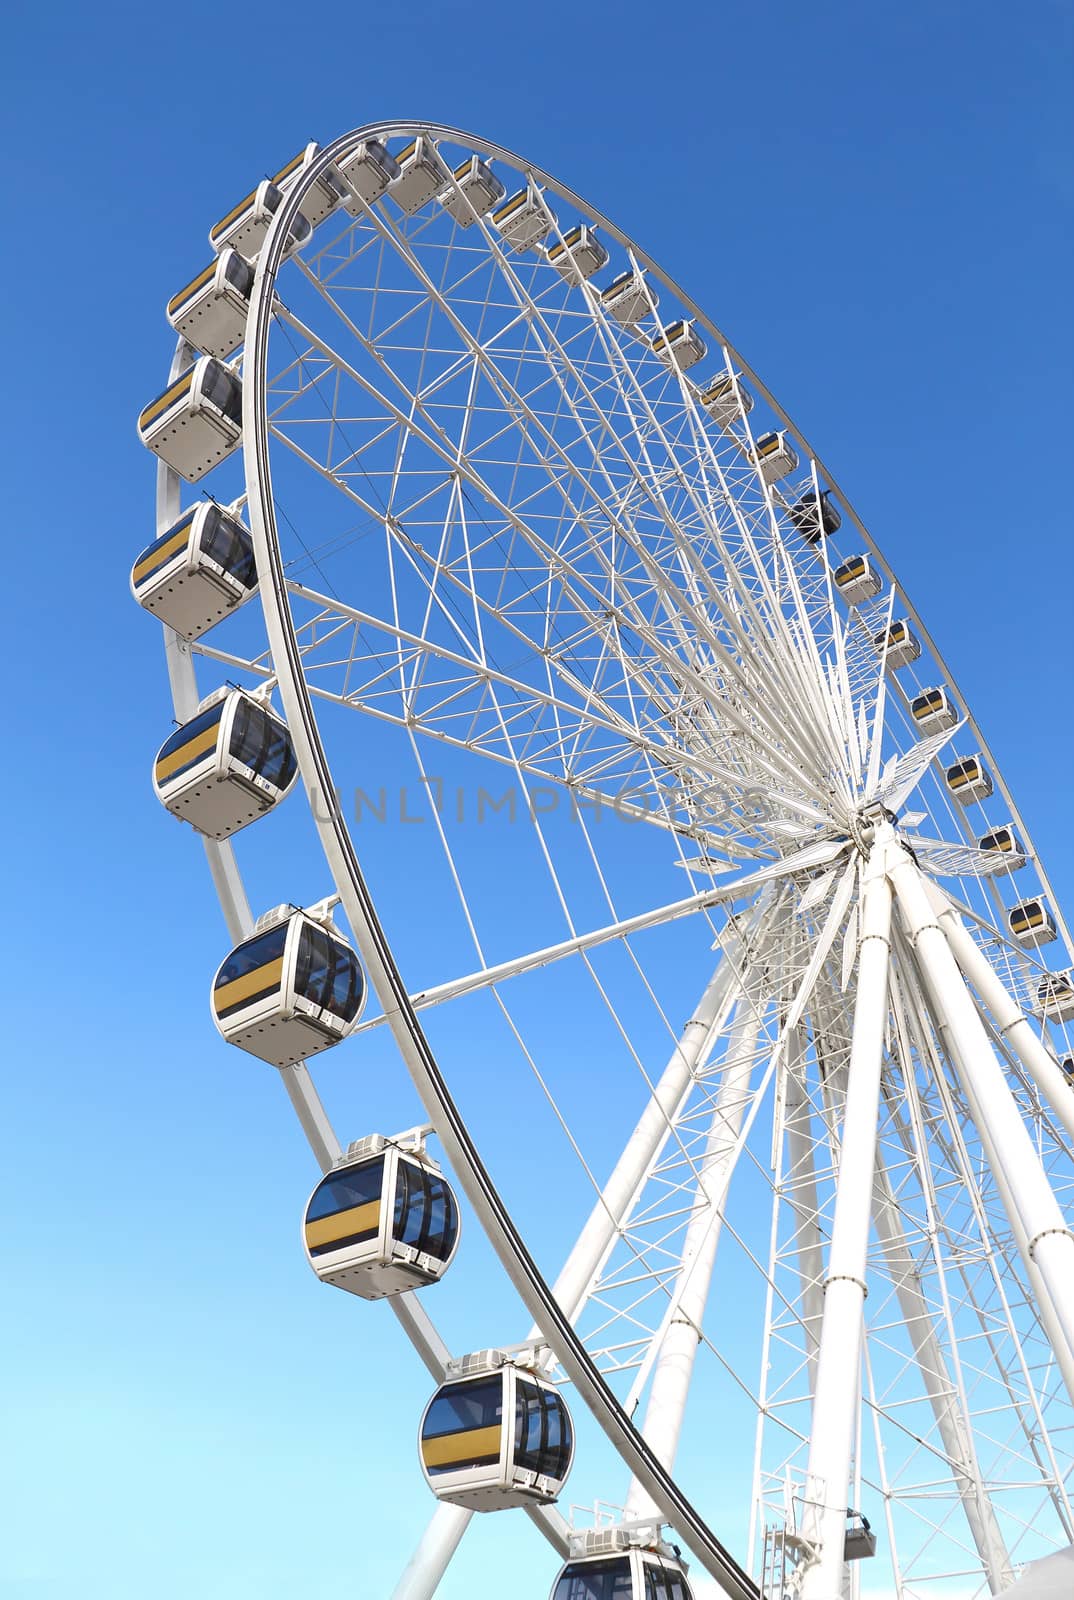 Ferris wheel against a blue sky 